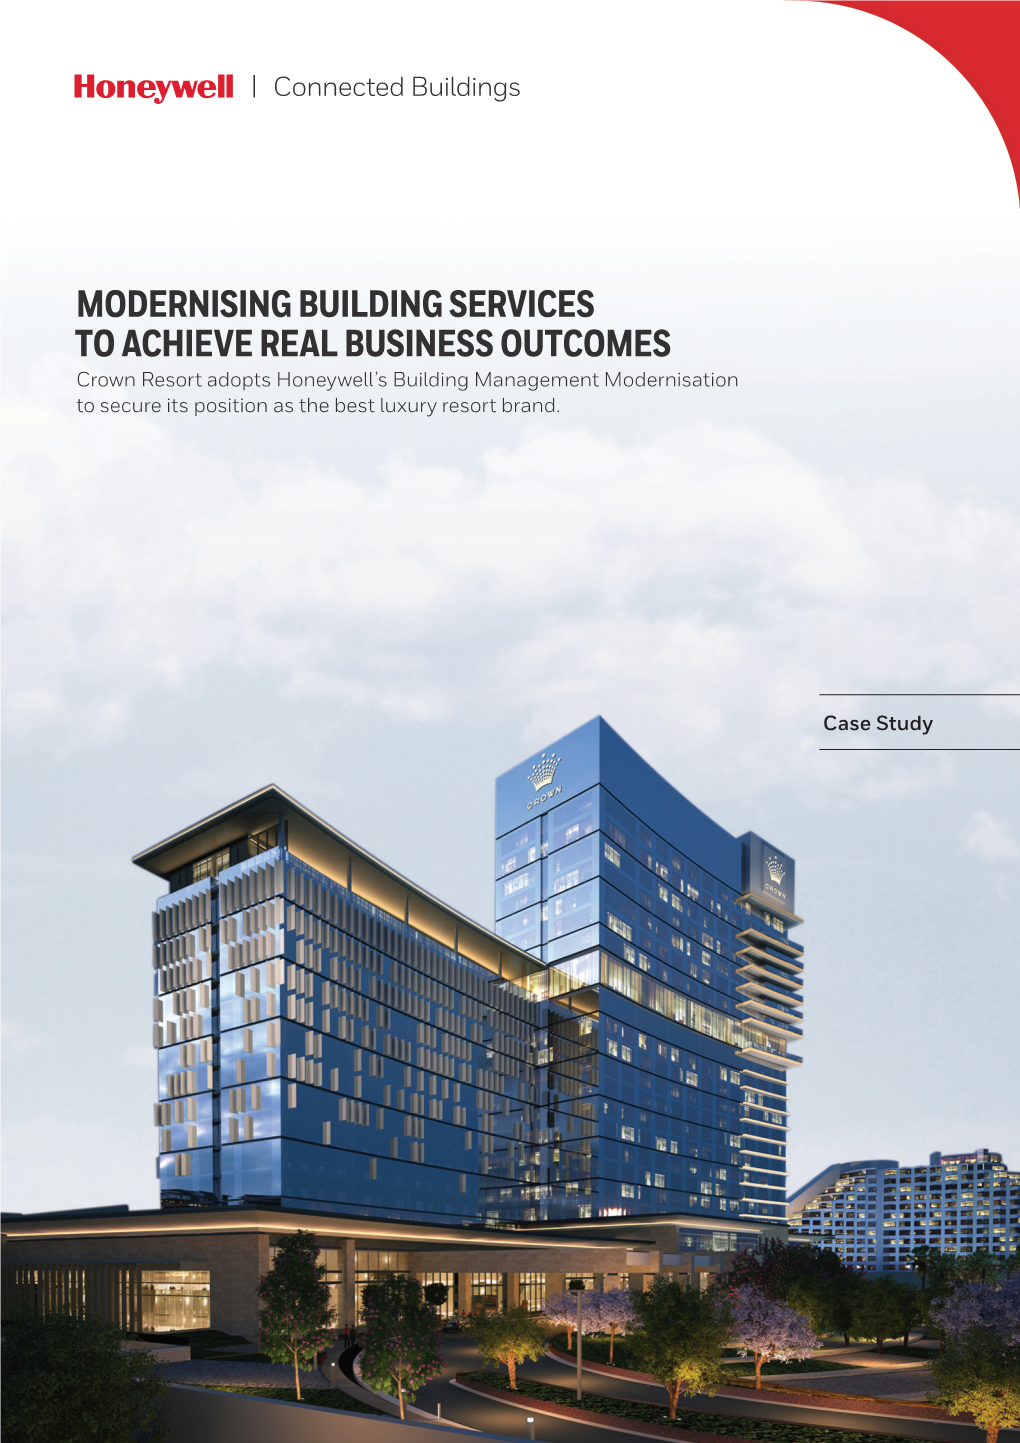 Crown Resort Adopts Honeywell's Building Management Modernization